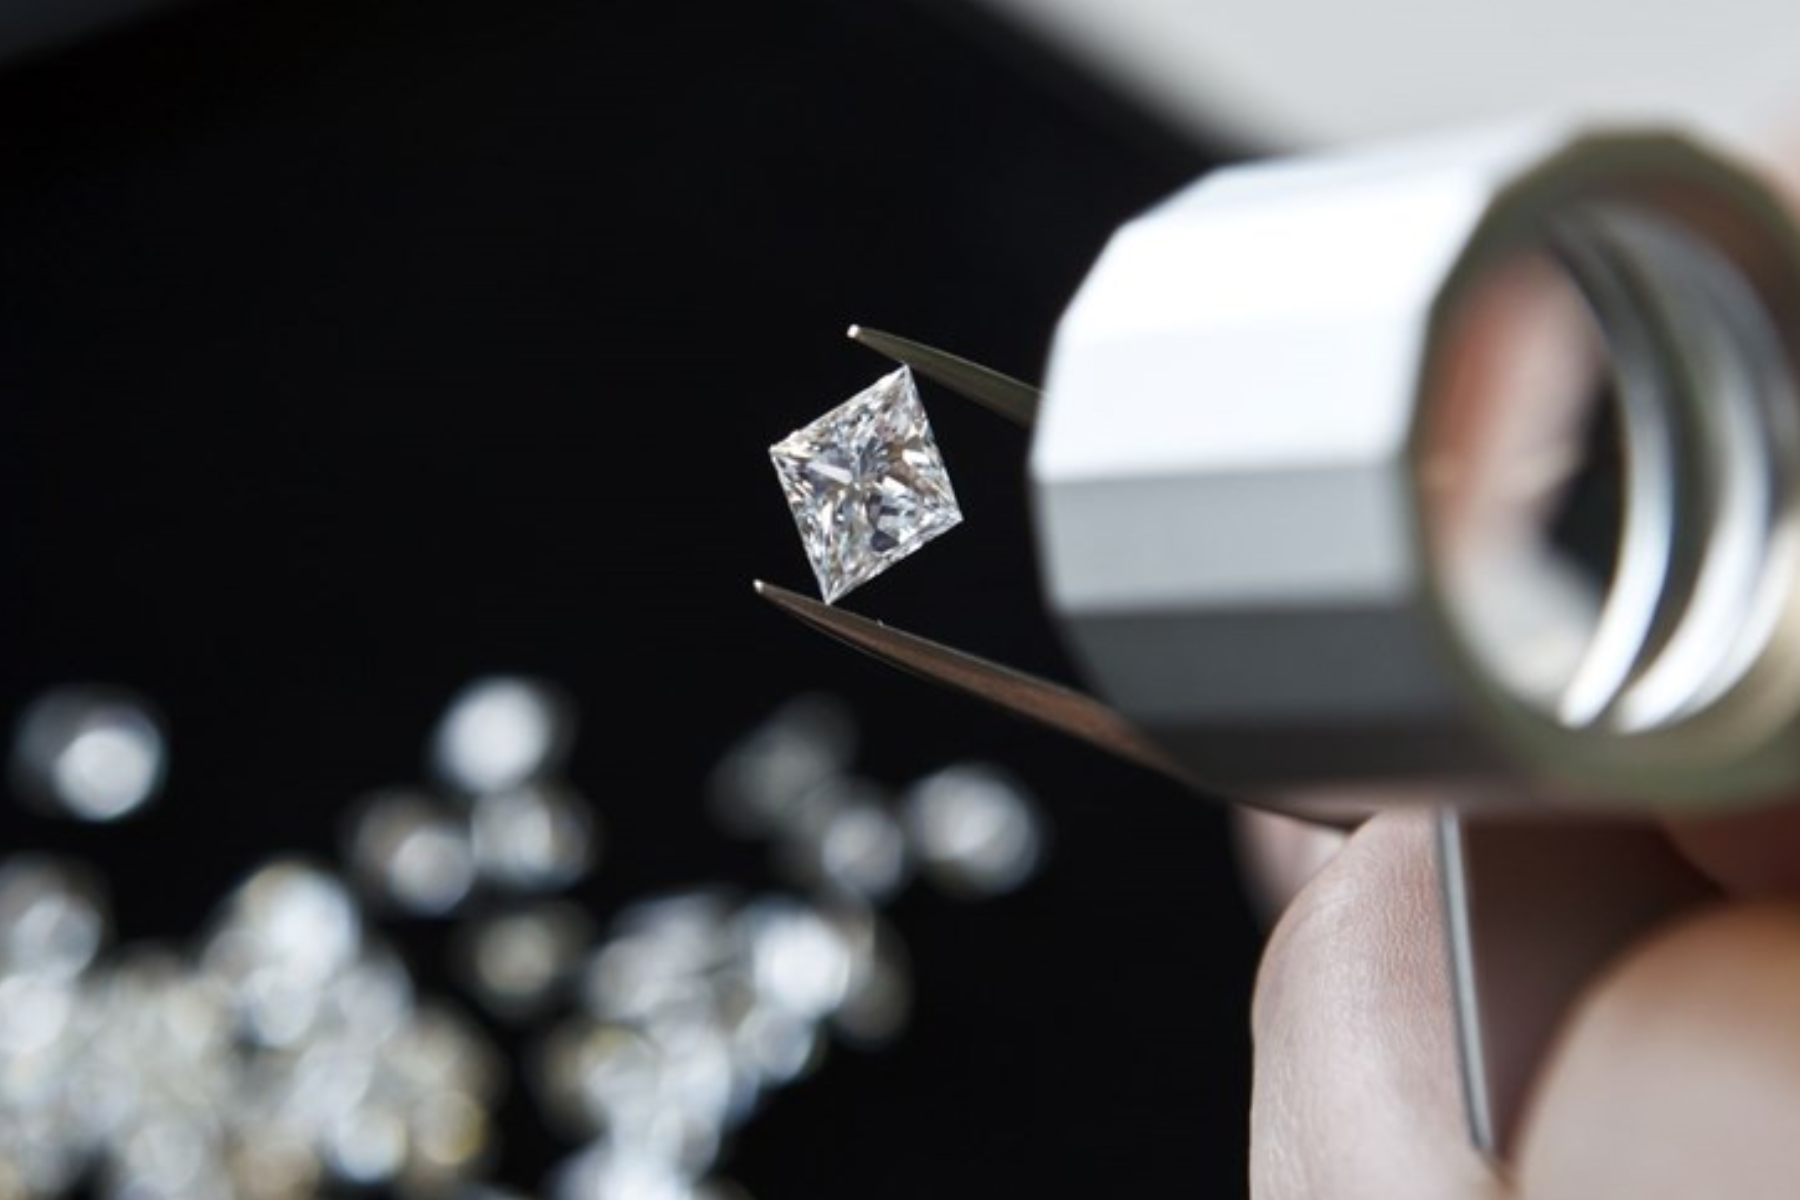 A diamond professional inspects a princess-cut diamond with a lense